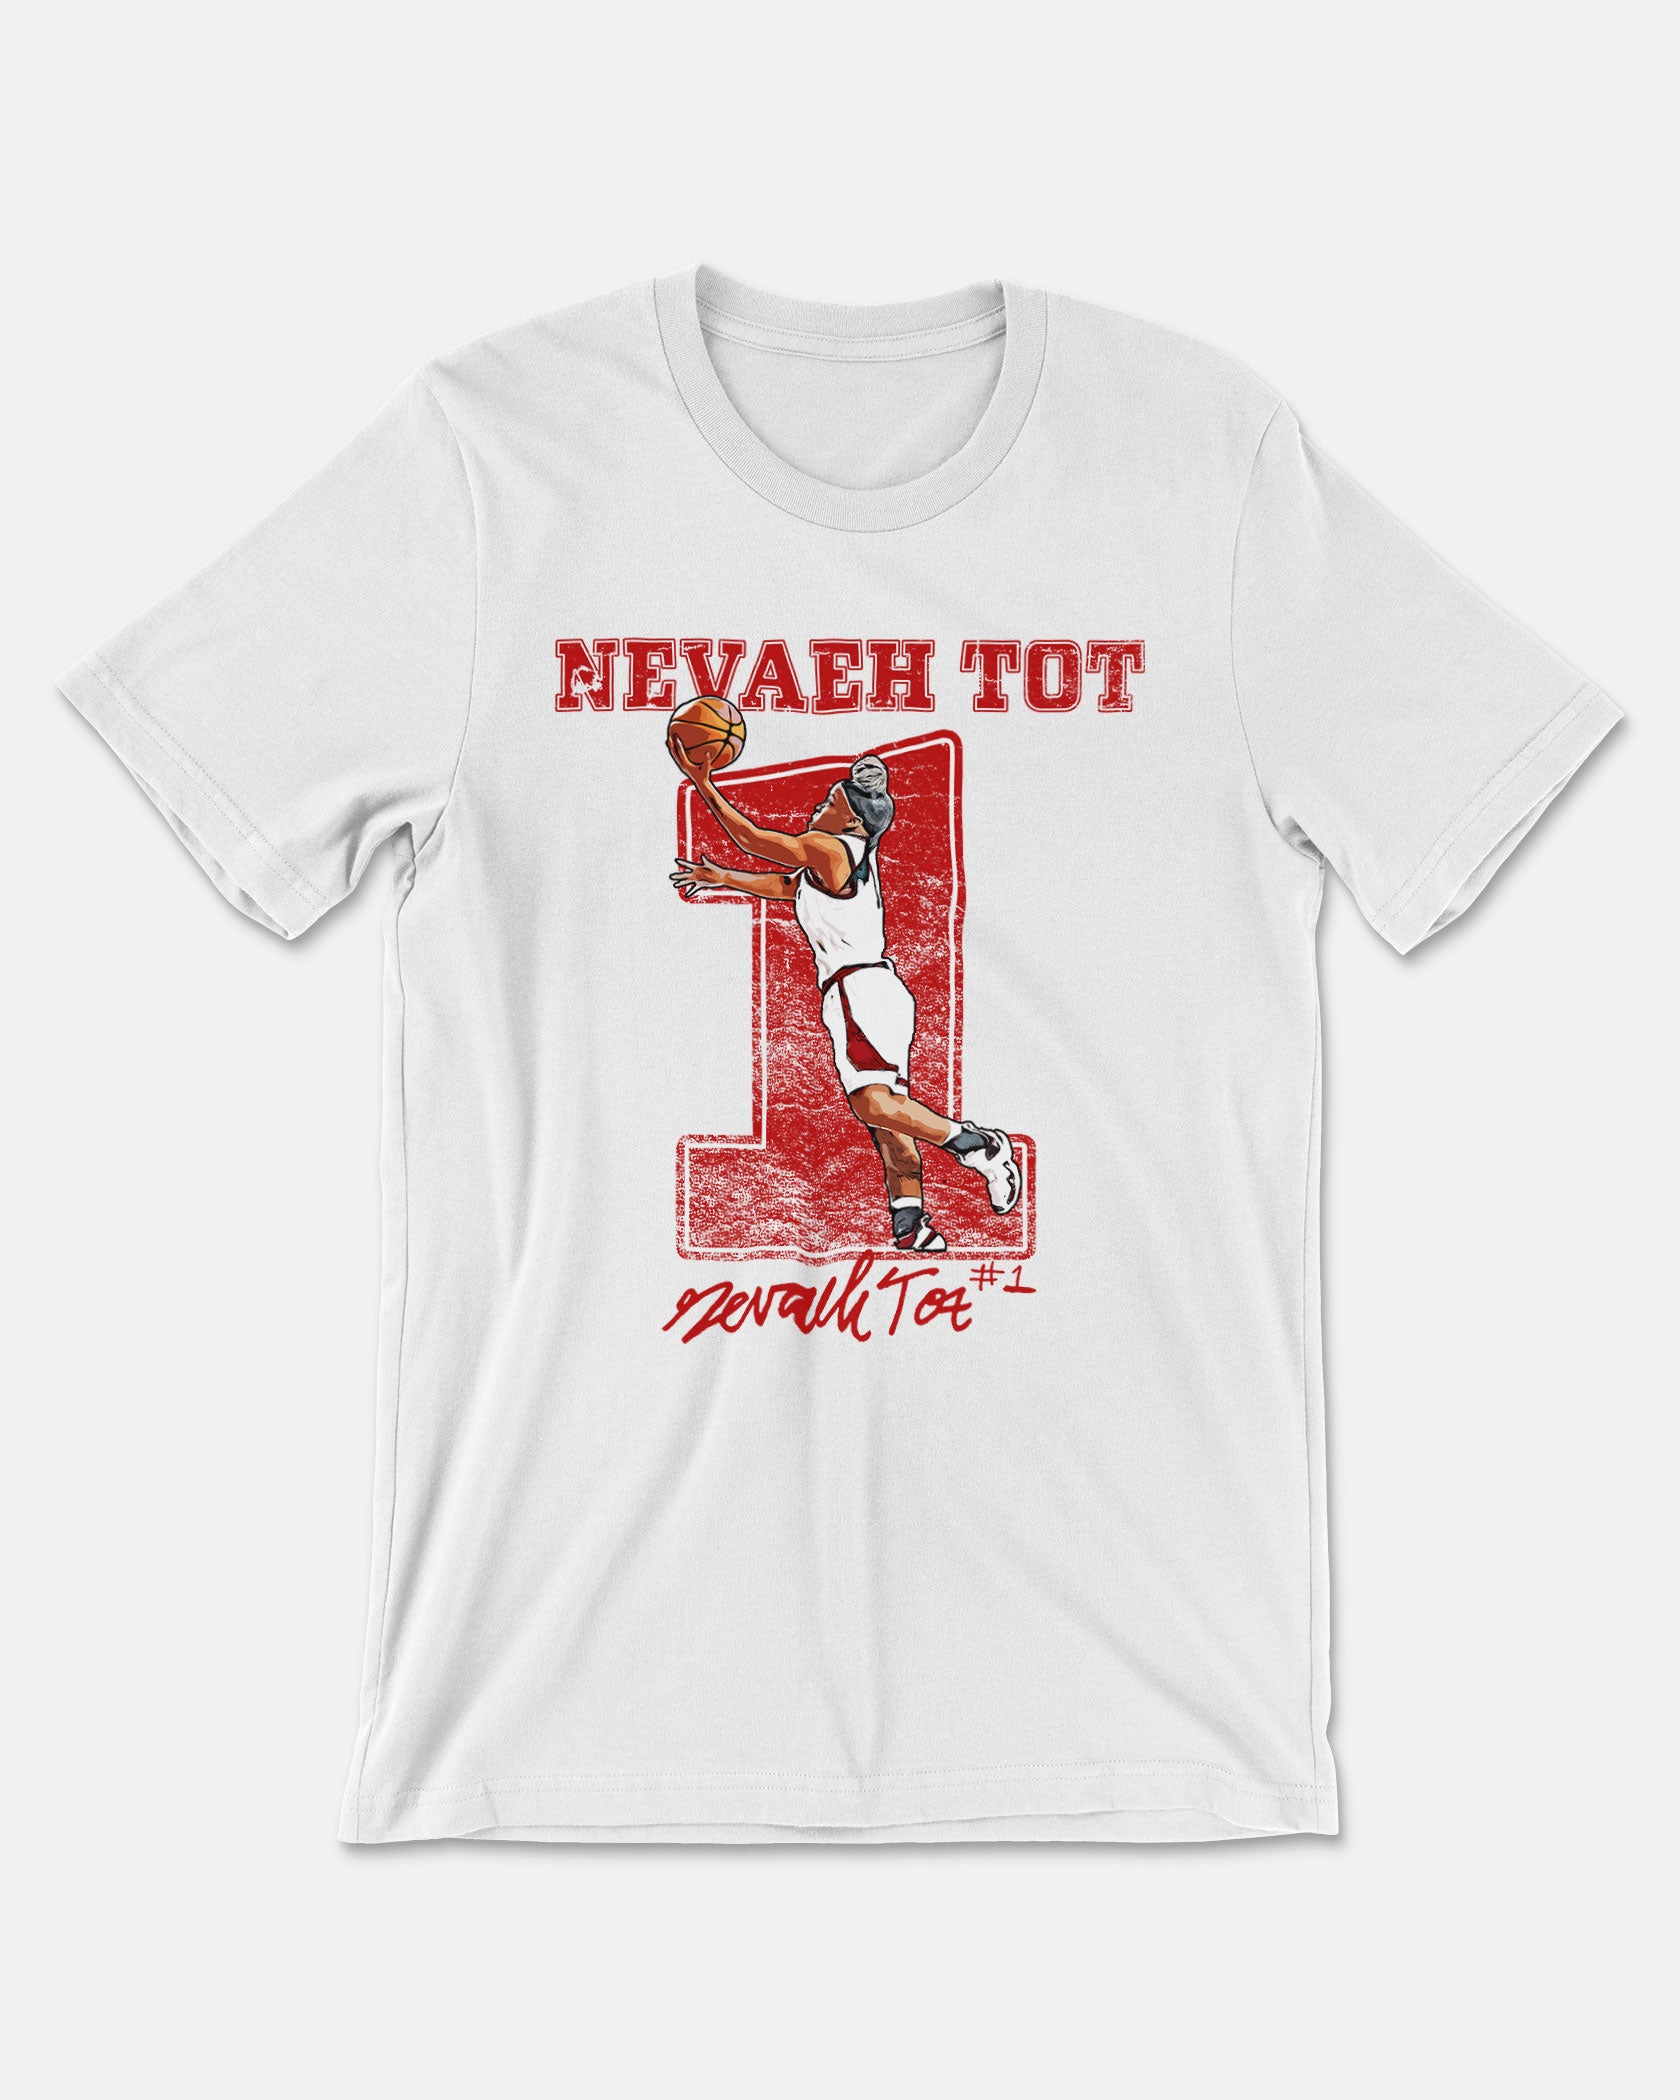 Nevaeh Tot Shirt 002